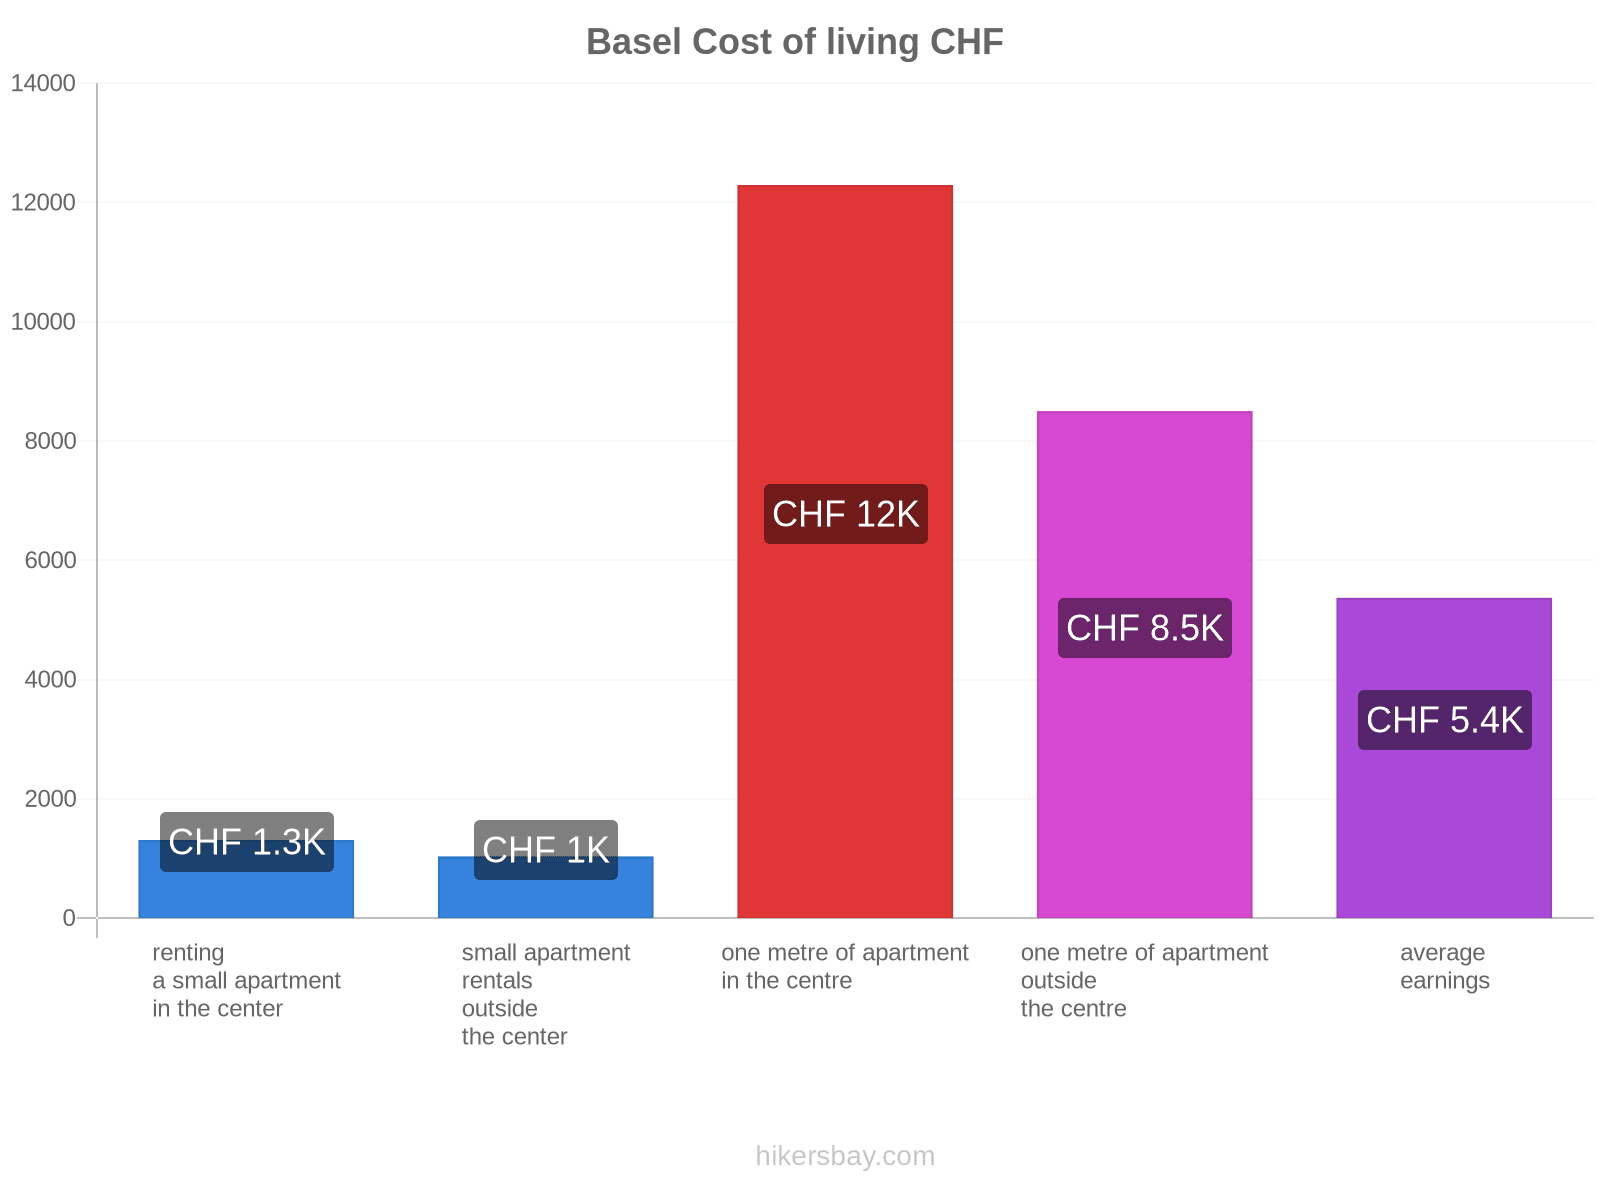 Basel cost of living hikersbay.com